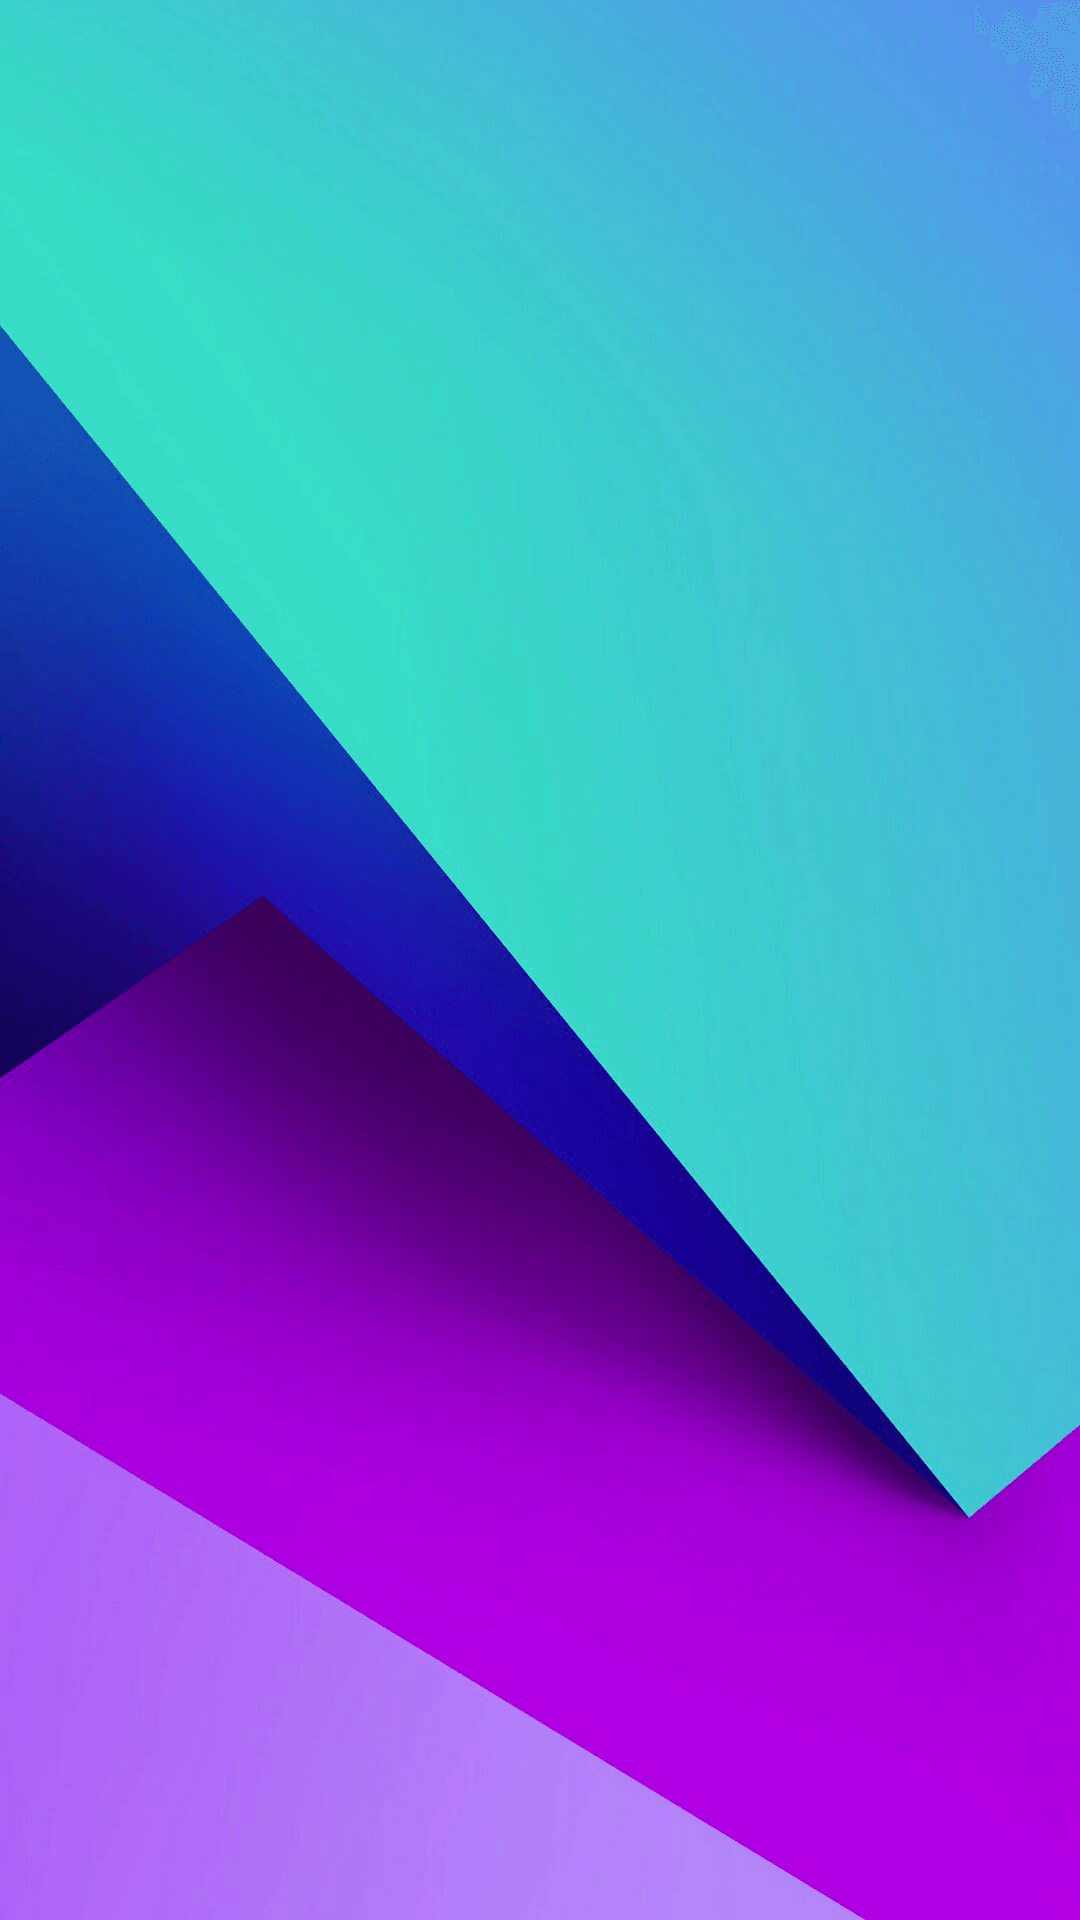 fond d'écran samsung hd,bleu,violet,violet,turquoise,ligne